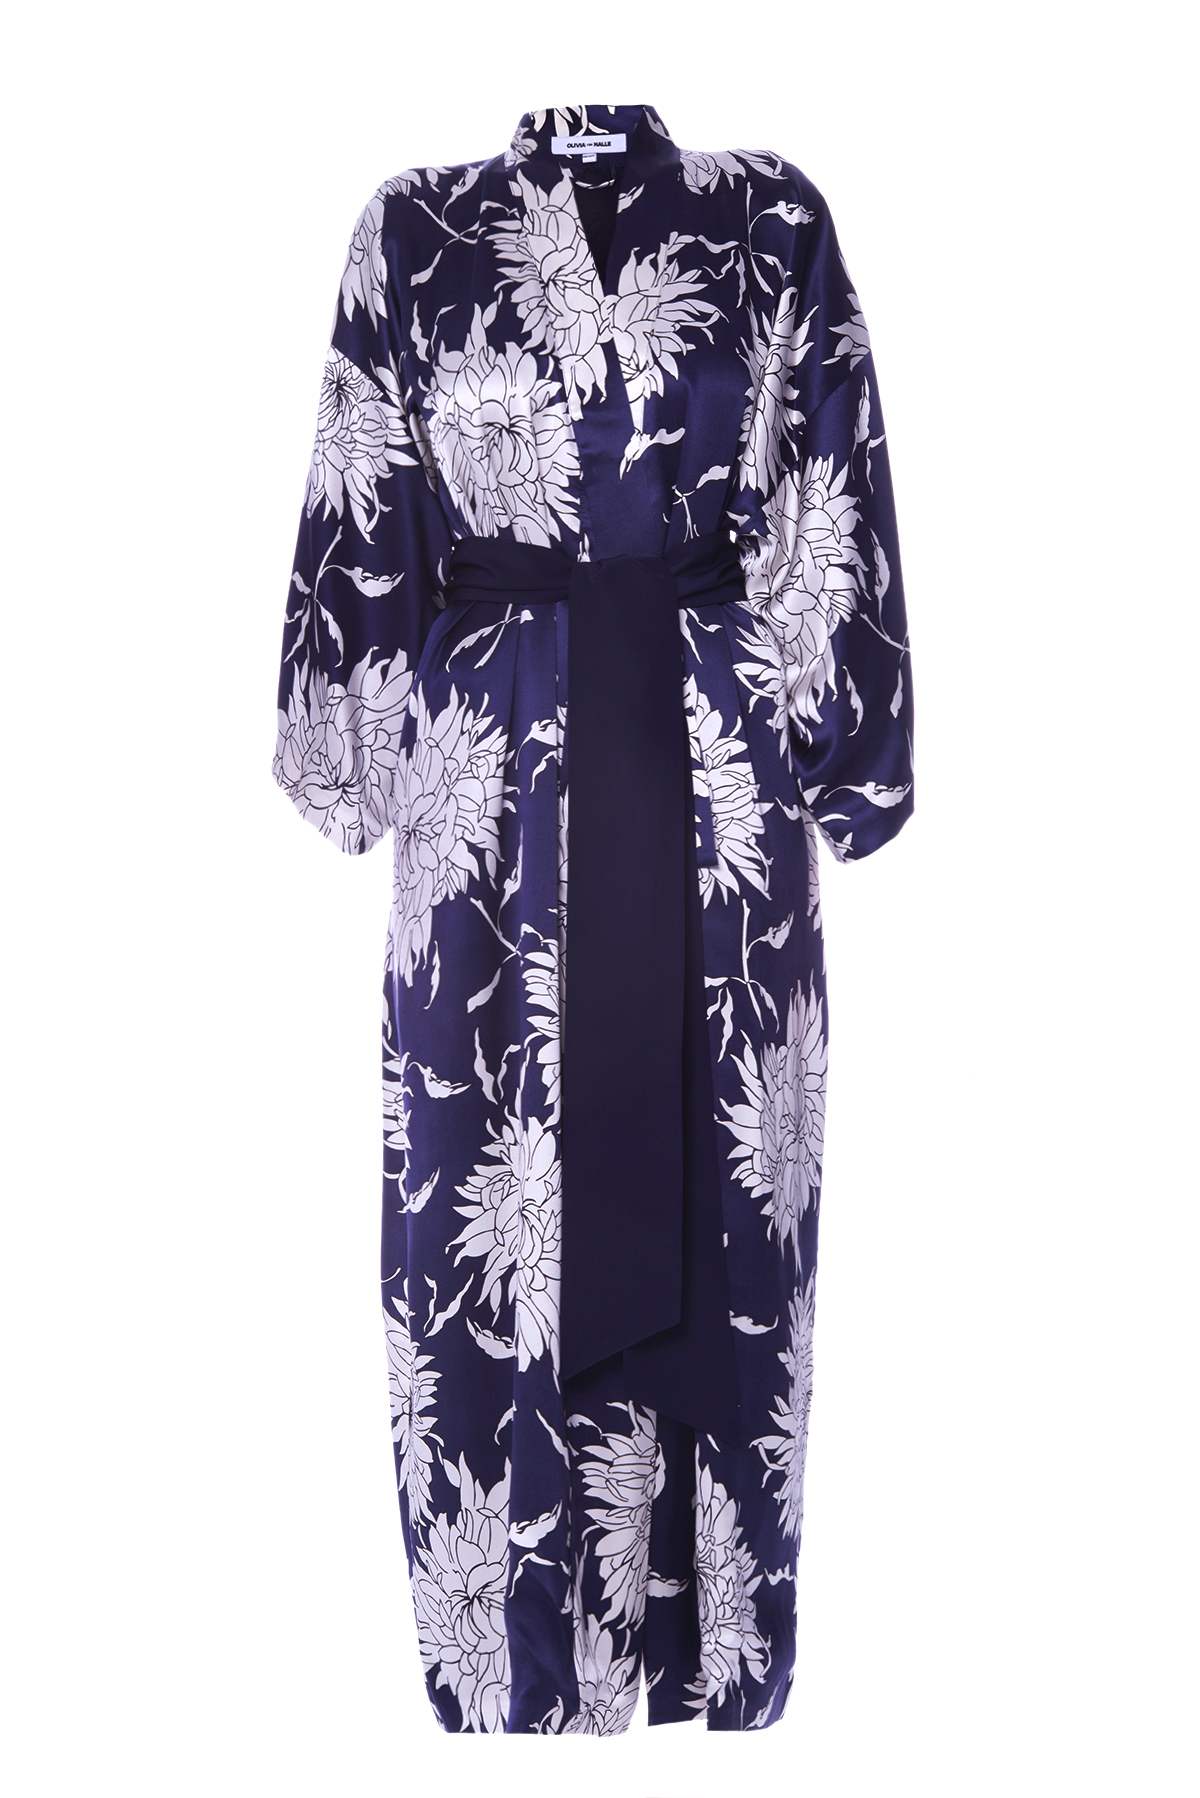 Olivia Von Halle kimono - KM20 Online Store